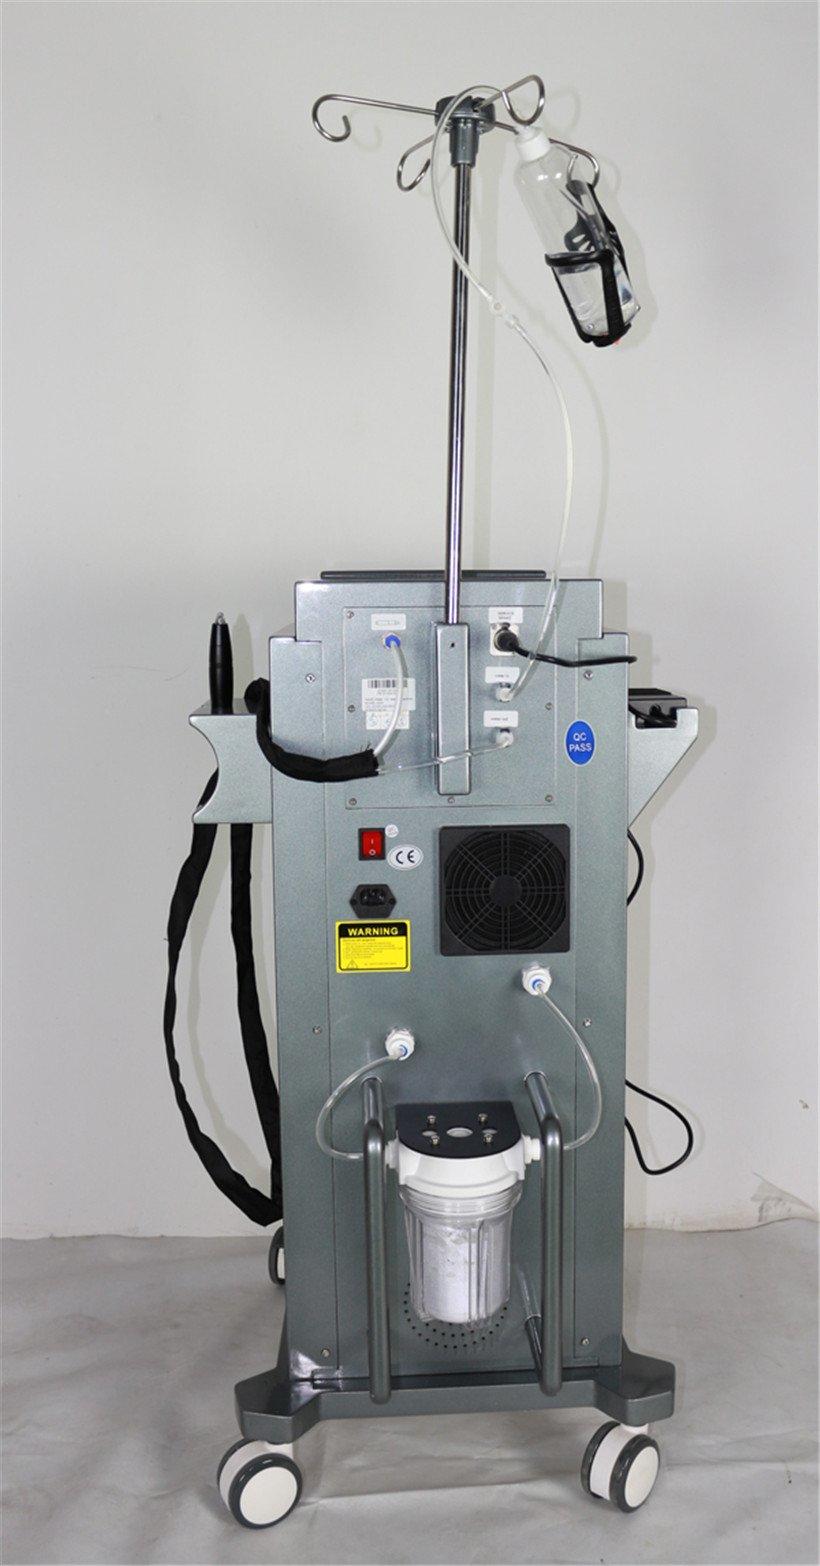 Tingmay Brand needle vacuum machine  electric oxygen machine